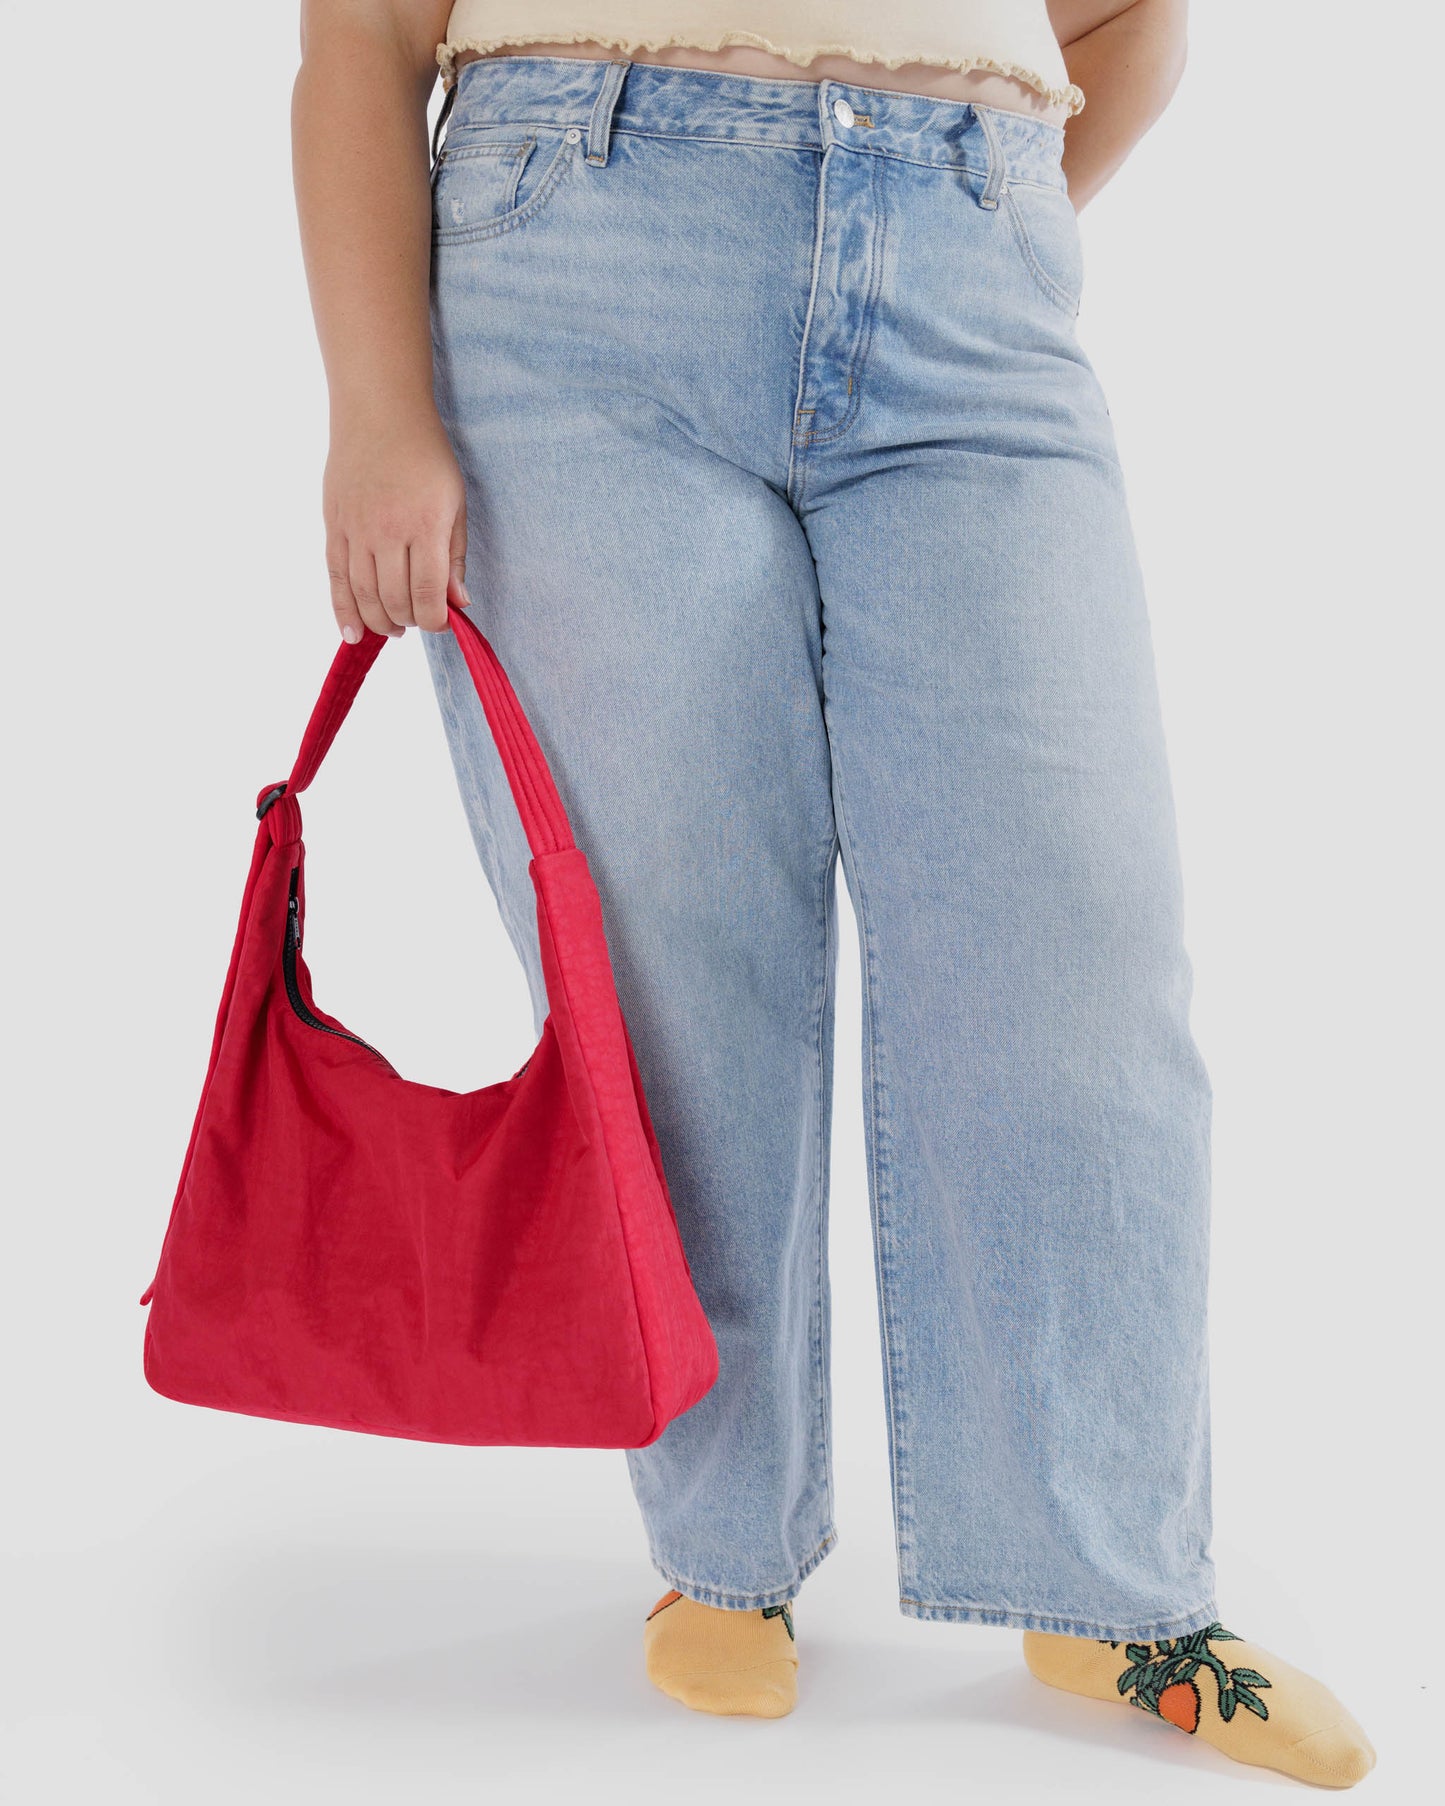 Baggu | Mini Nylon Shoulder Bag - Candy Apple